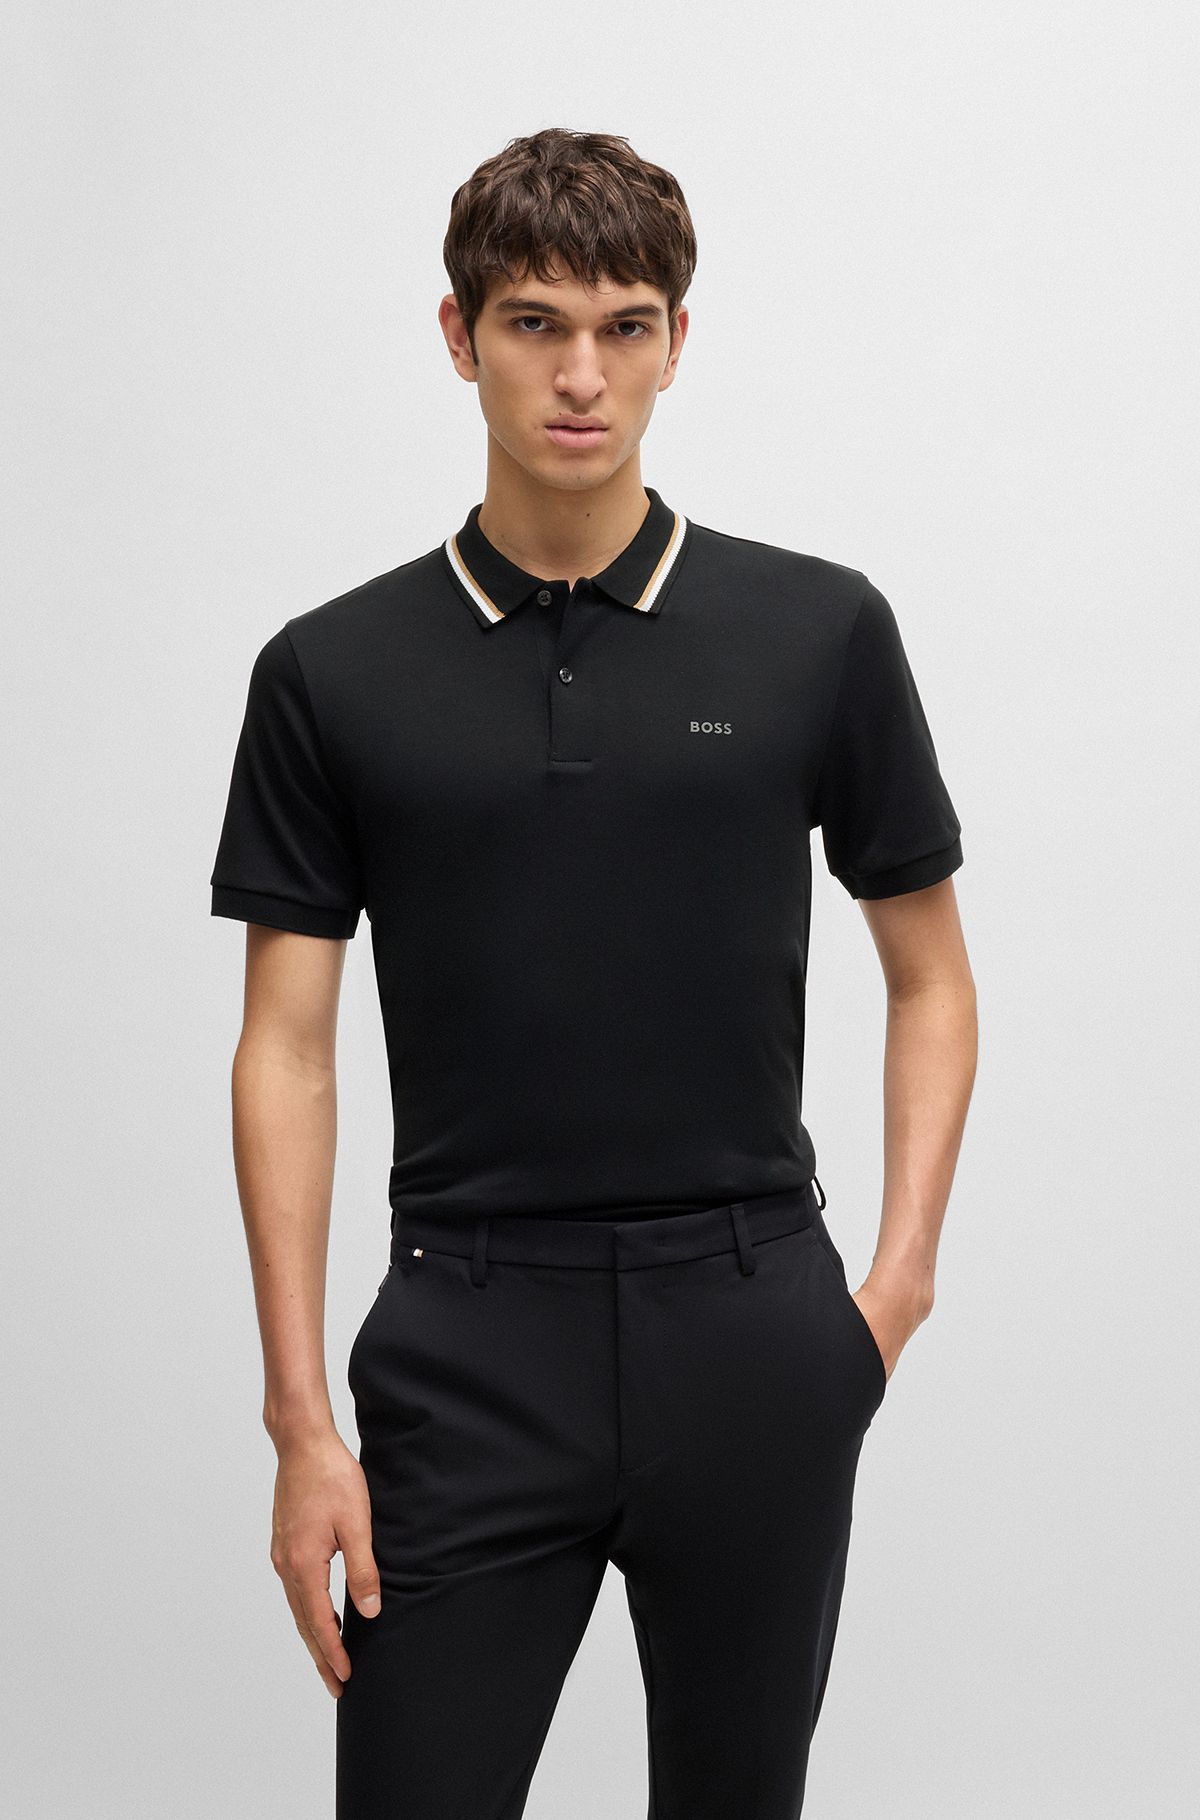 BOSS by HUGO BOSS Las Vegas Raiders Polo Shirt in Black for Men